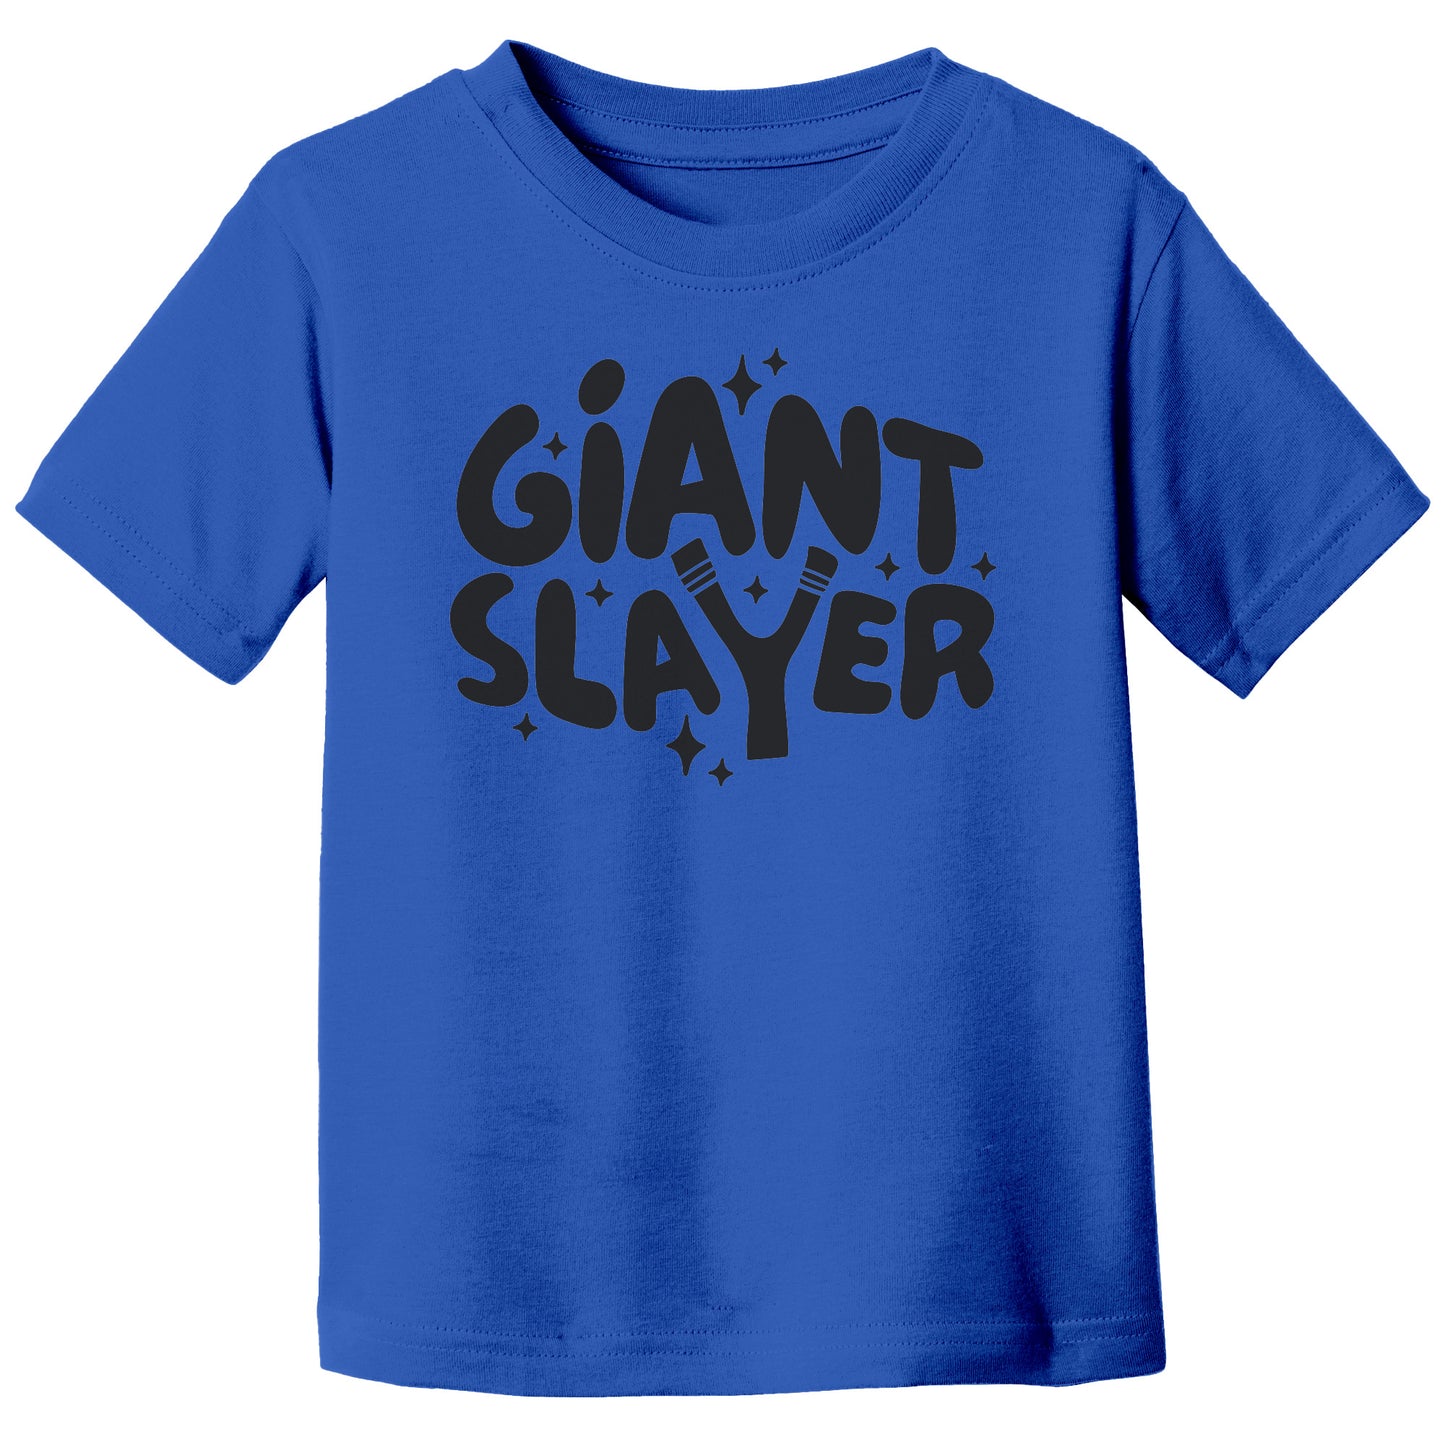 Giant Slayer Toddler T-Shirt